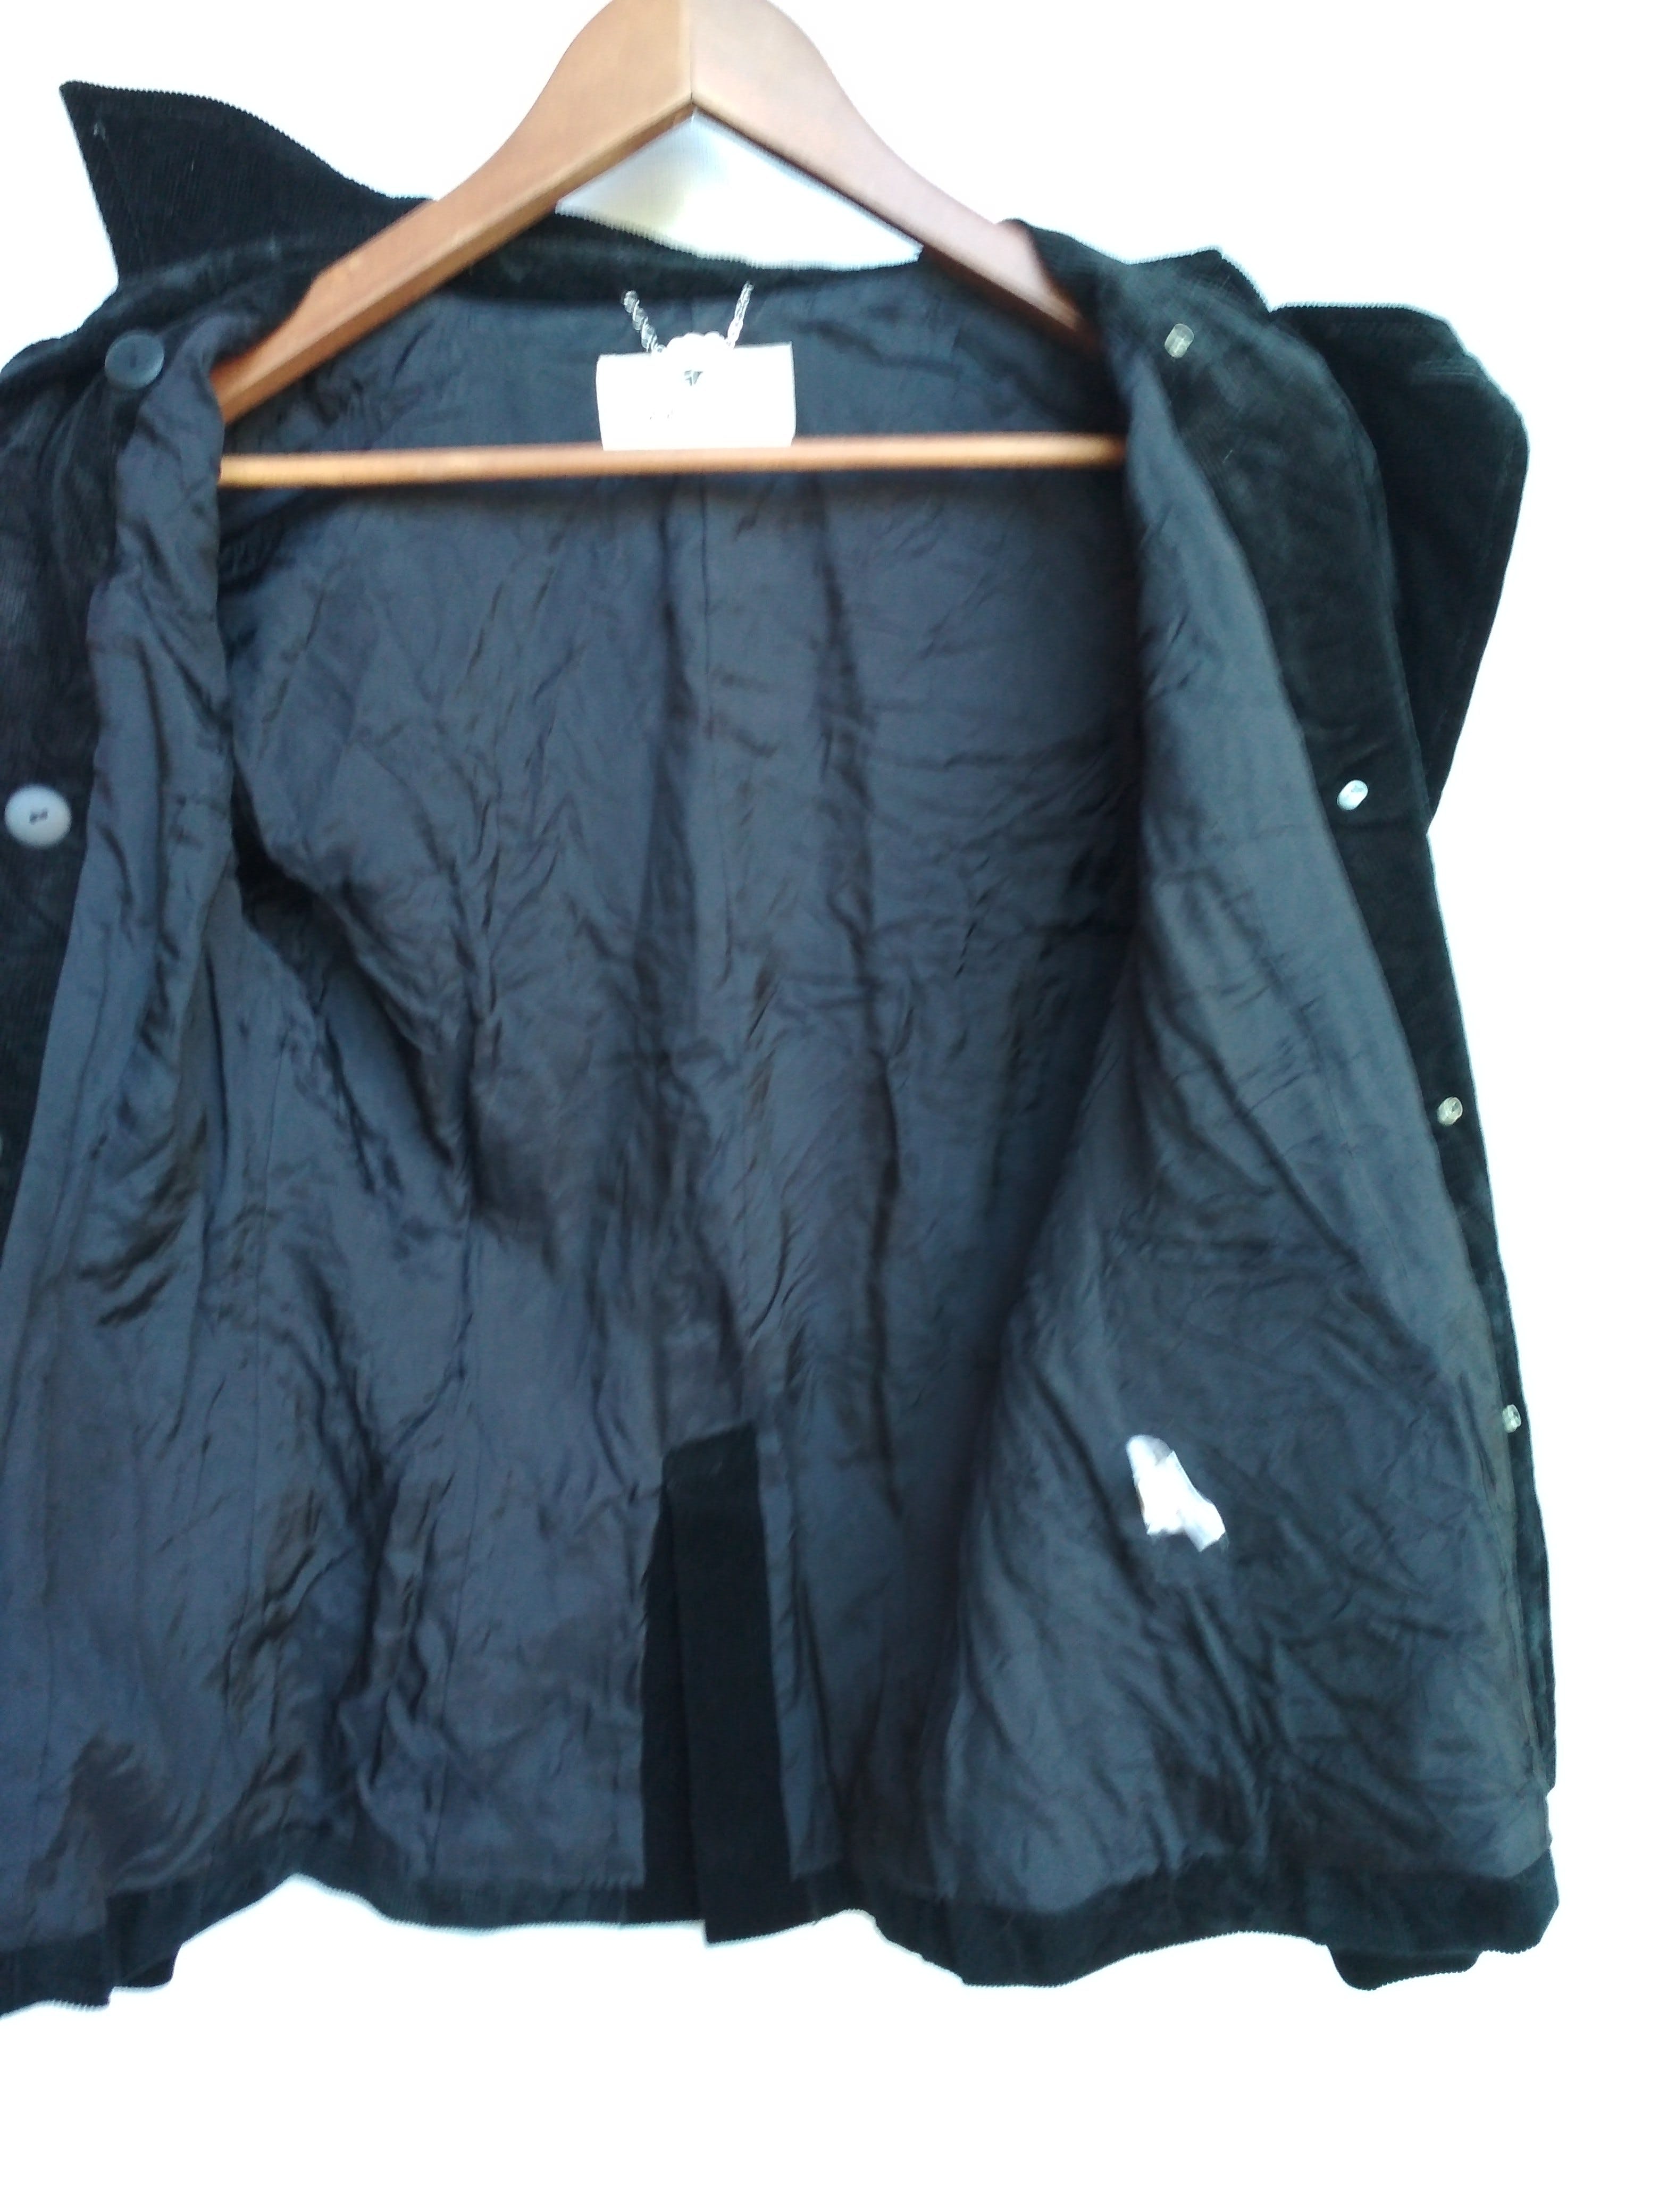 courreges black corduroy double breasted jacket - 7